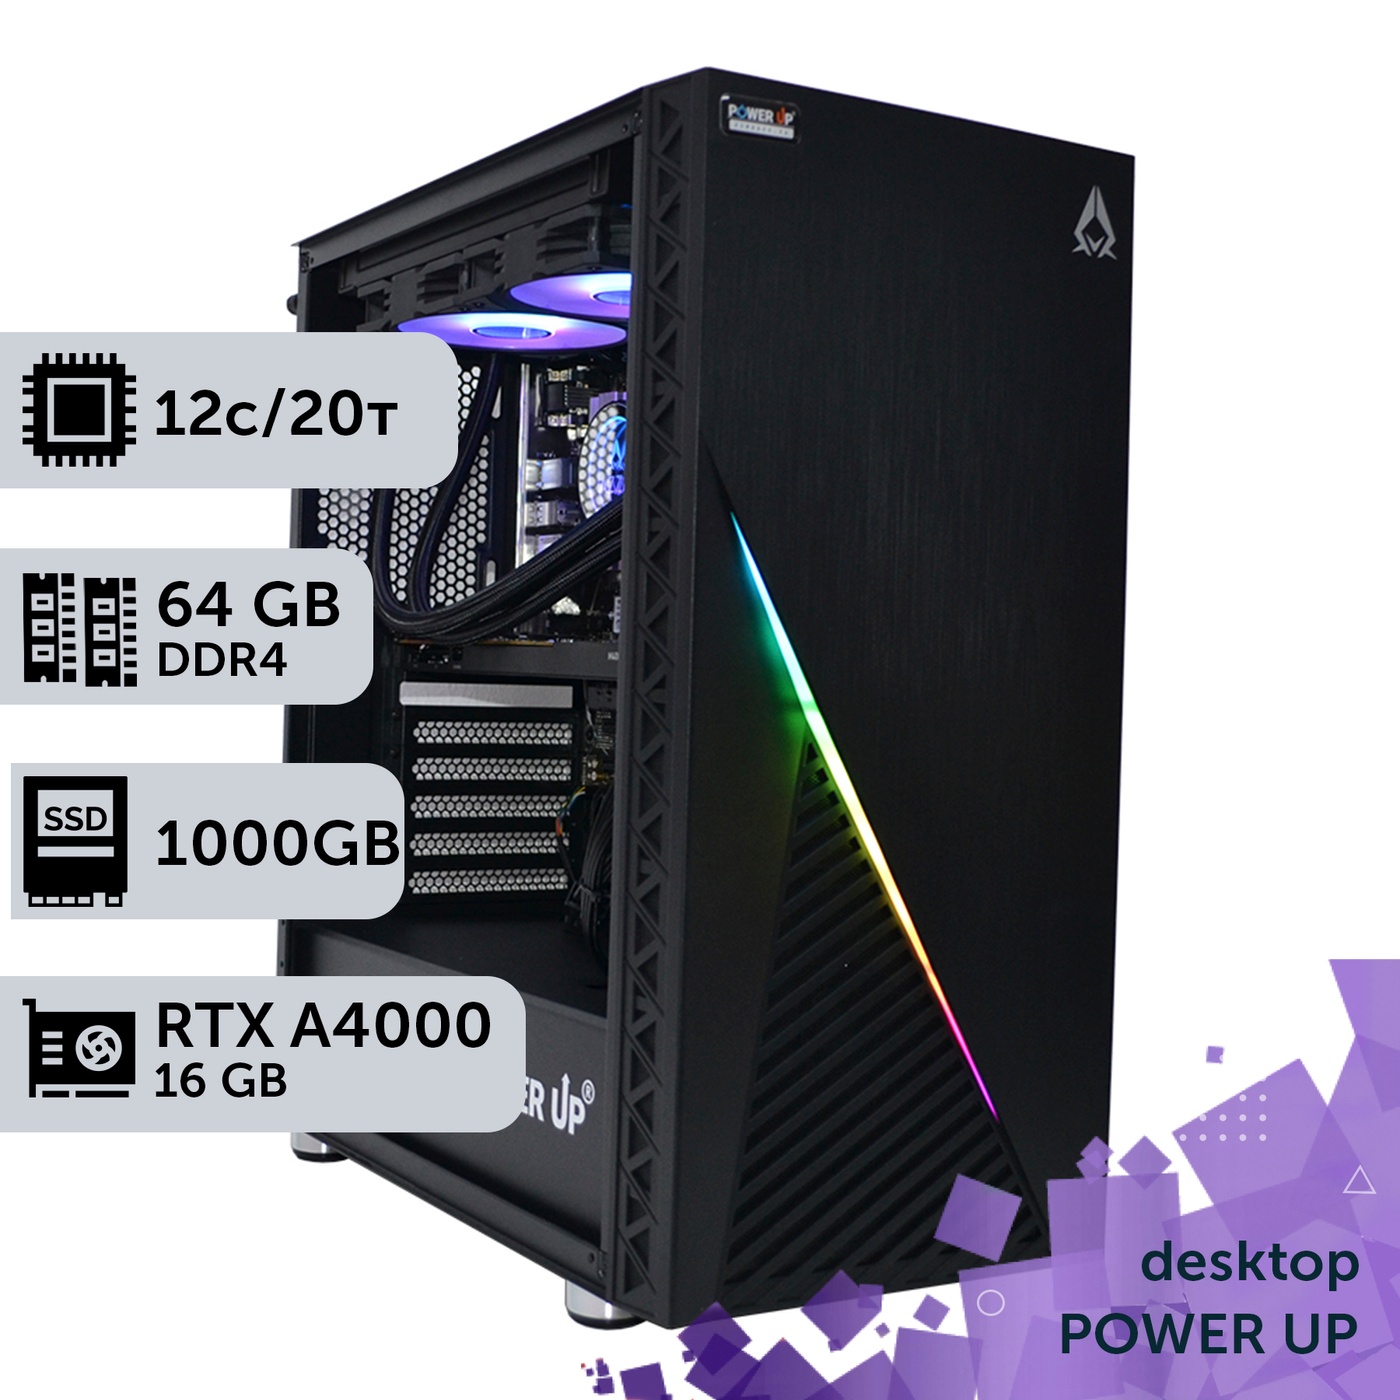 Робоча станція PowerUp Desktop #120 Core i7 12700K/64 GB/SSD 1TB/NVIDIA Quadro RTX A4000 16GB